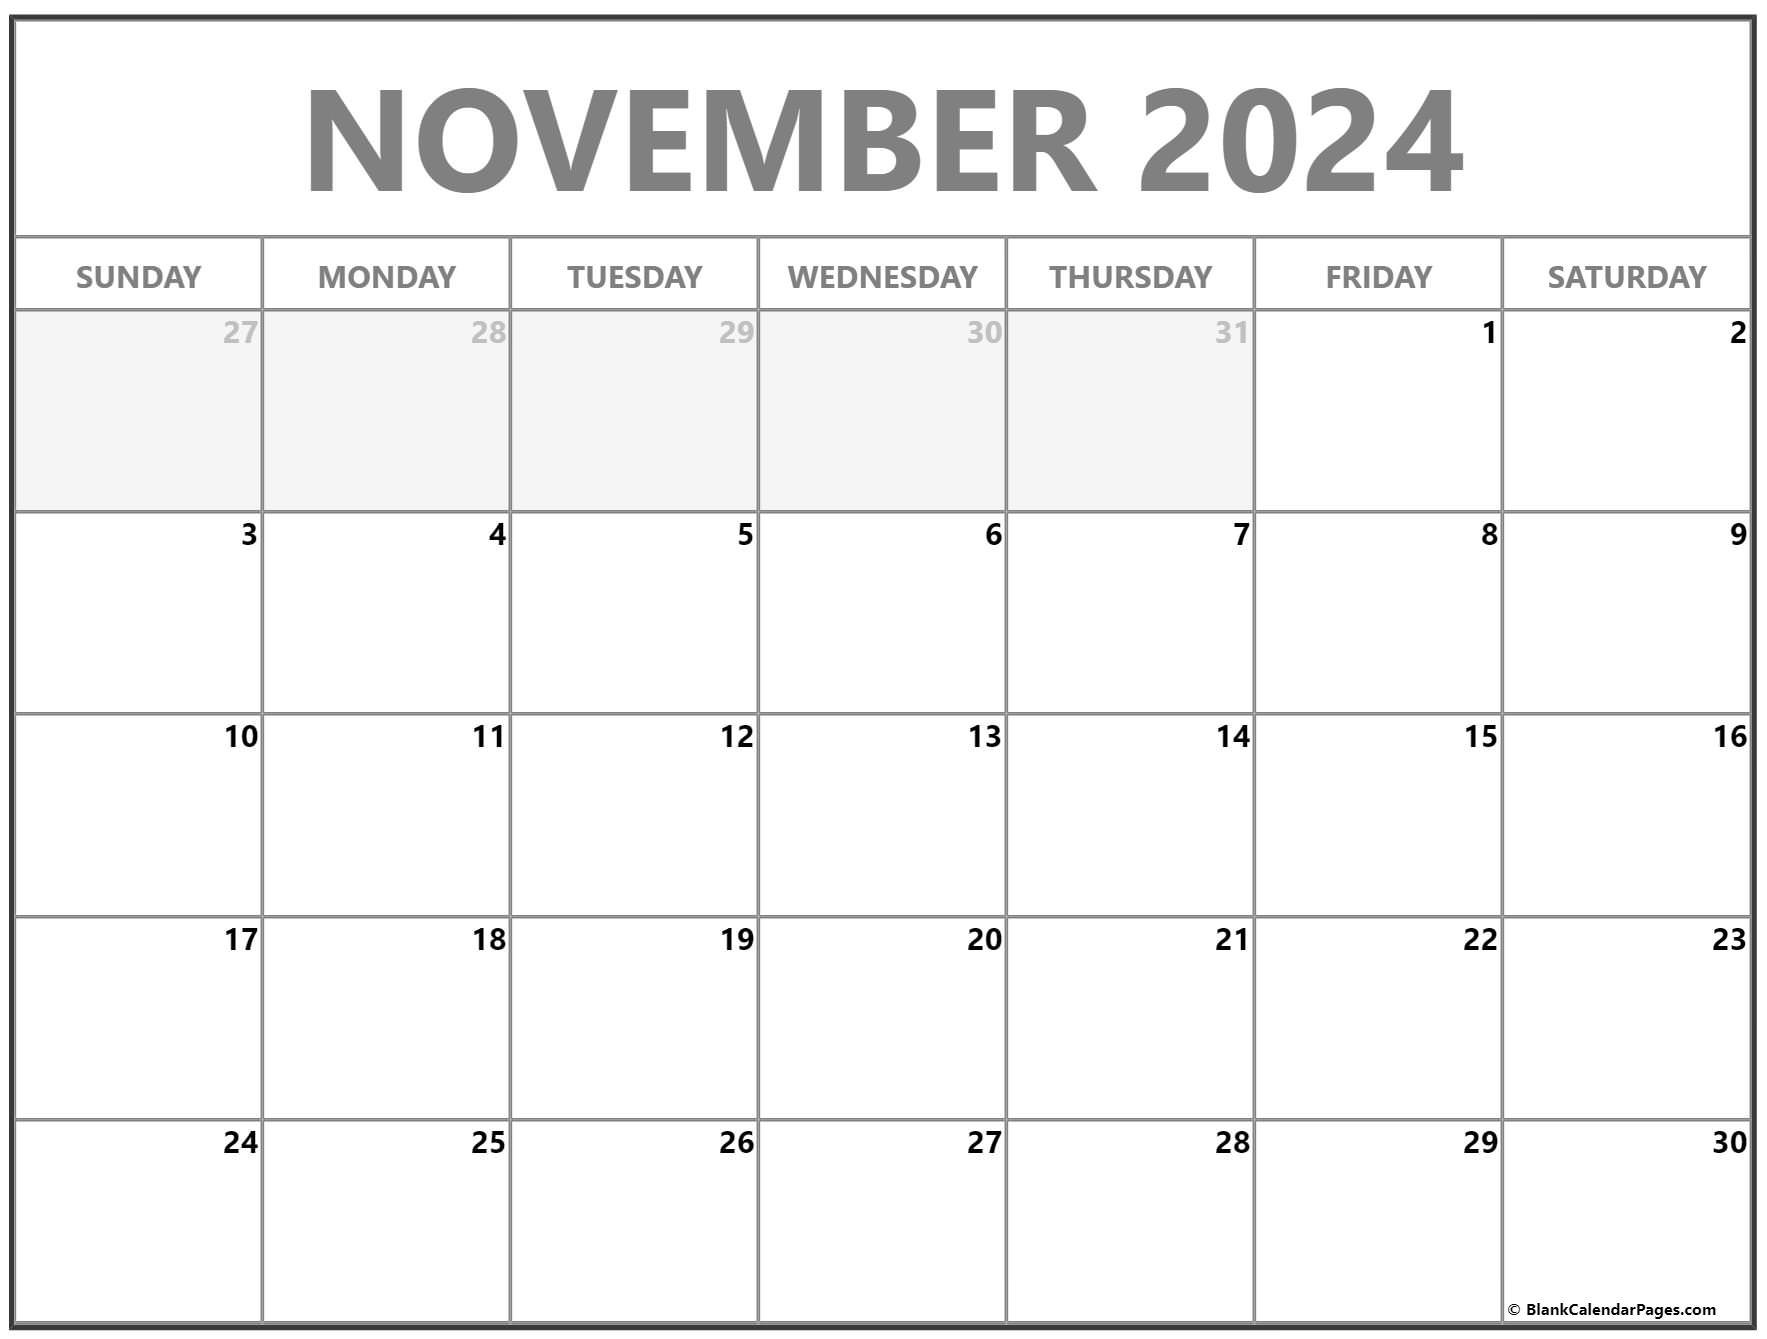 November 2024 Calendars (52 Free Printable PDFs)